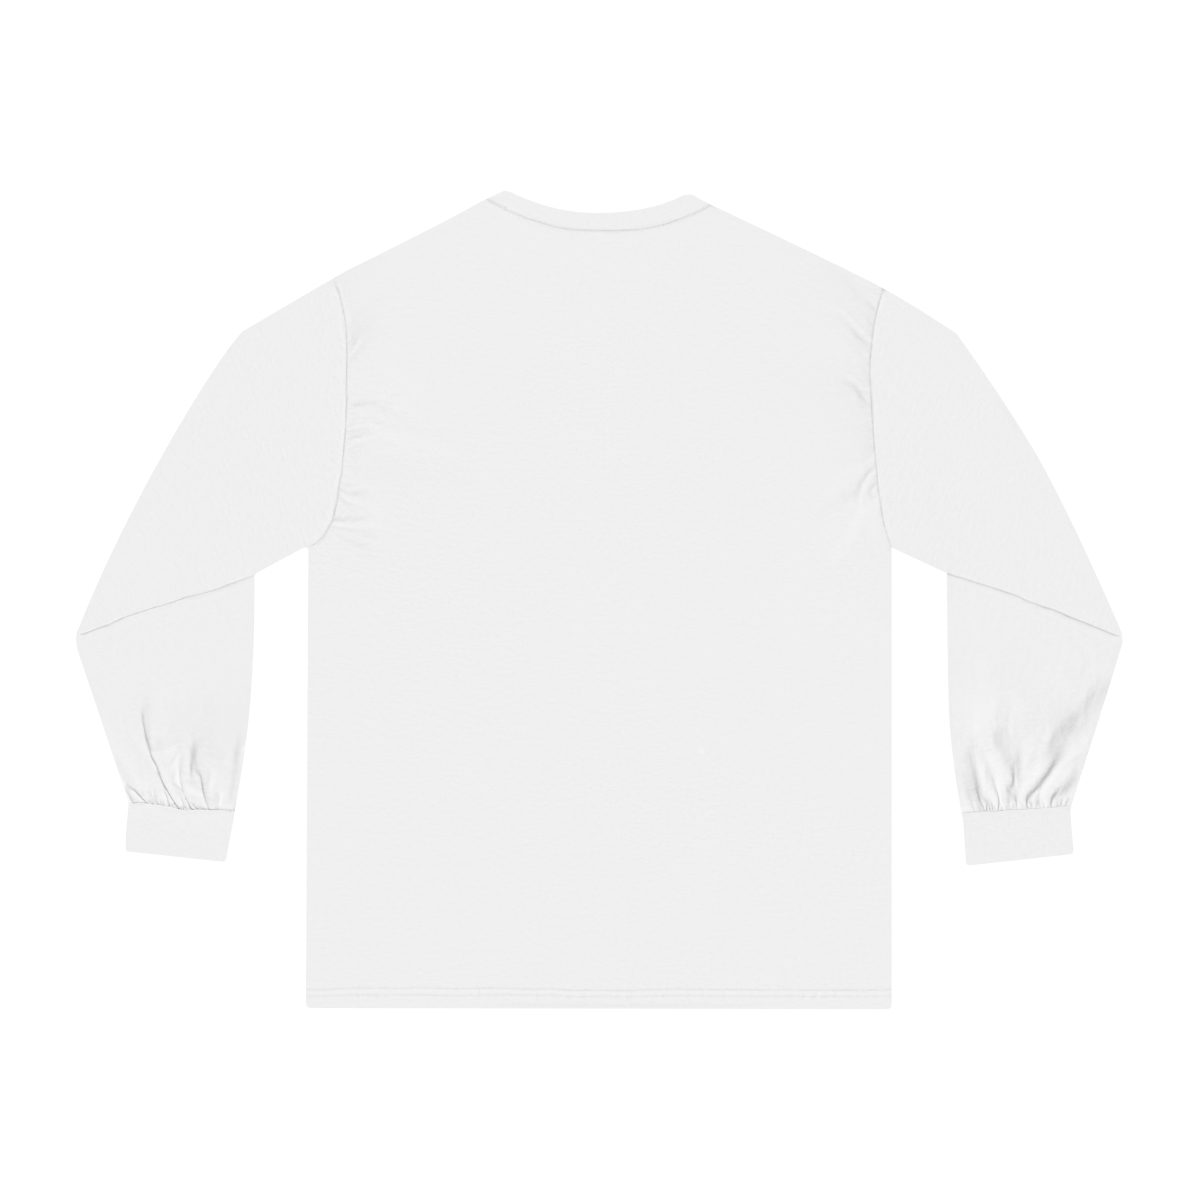 I'm the Vegan Option: Unisex Classic Long Sleeve T-Shirt product thumbnail image